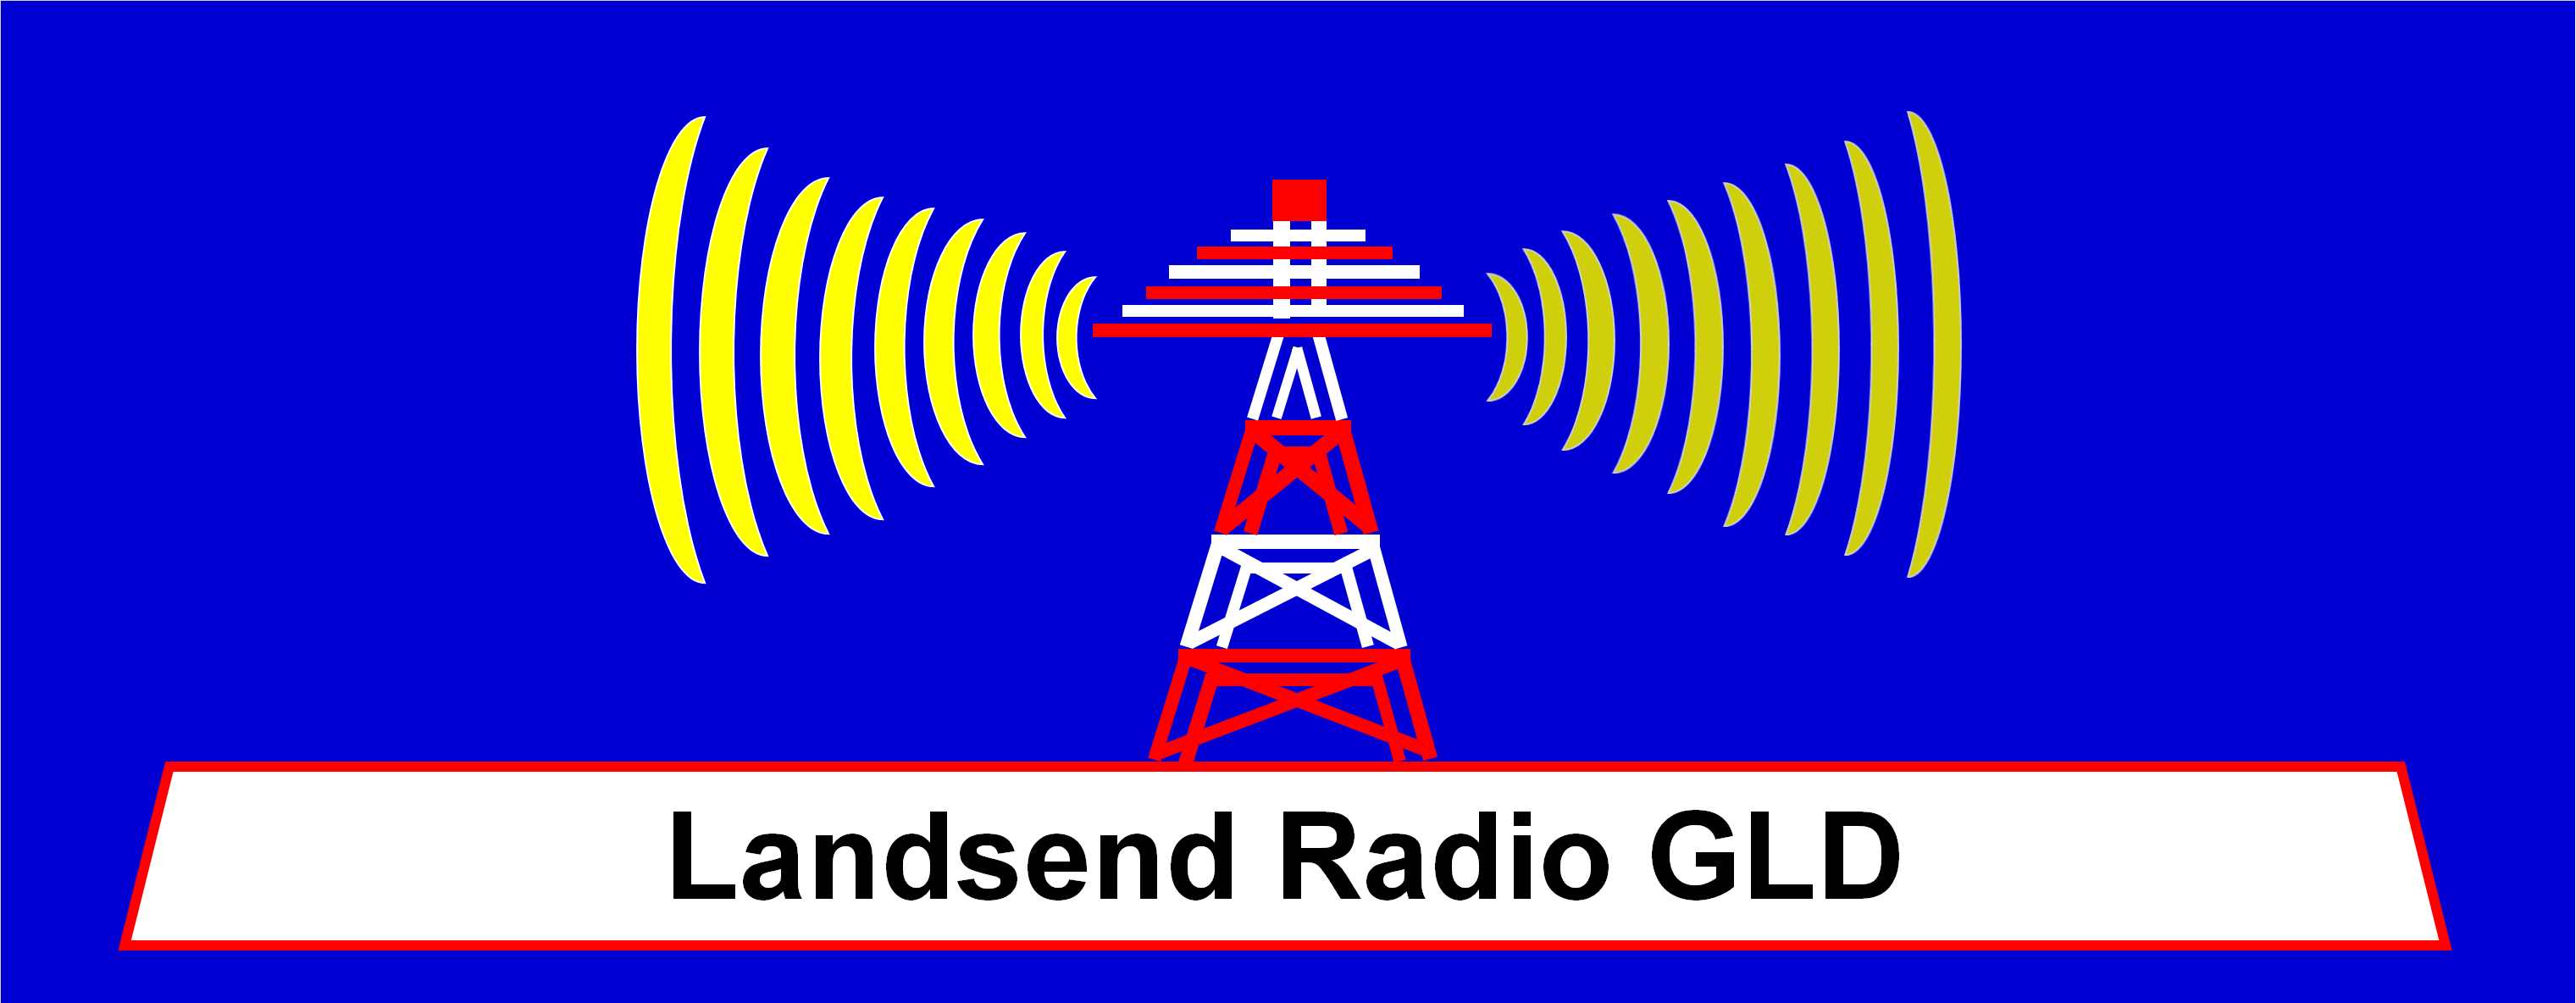 Landsend Radio GLD